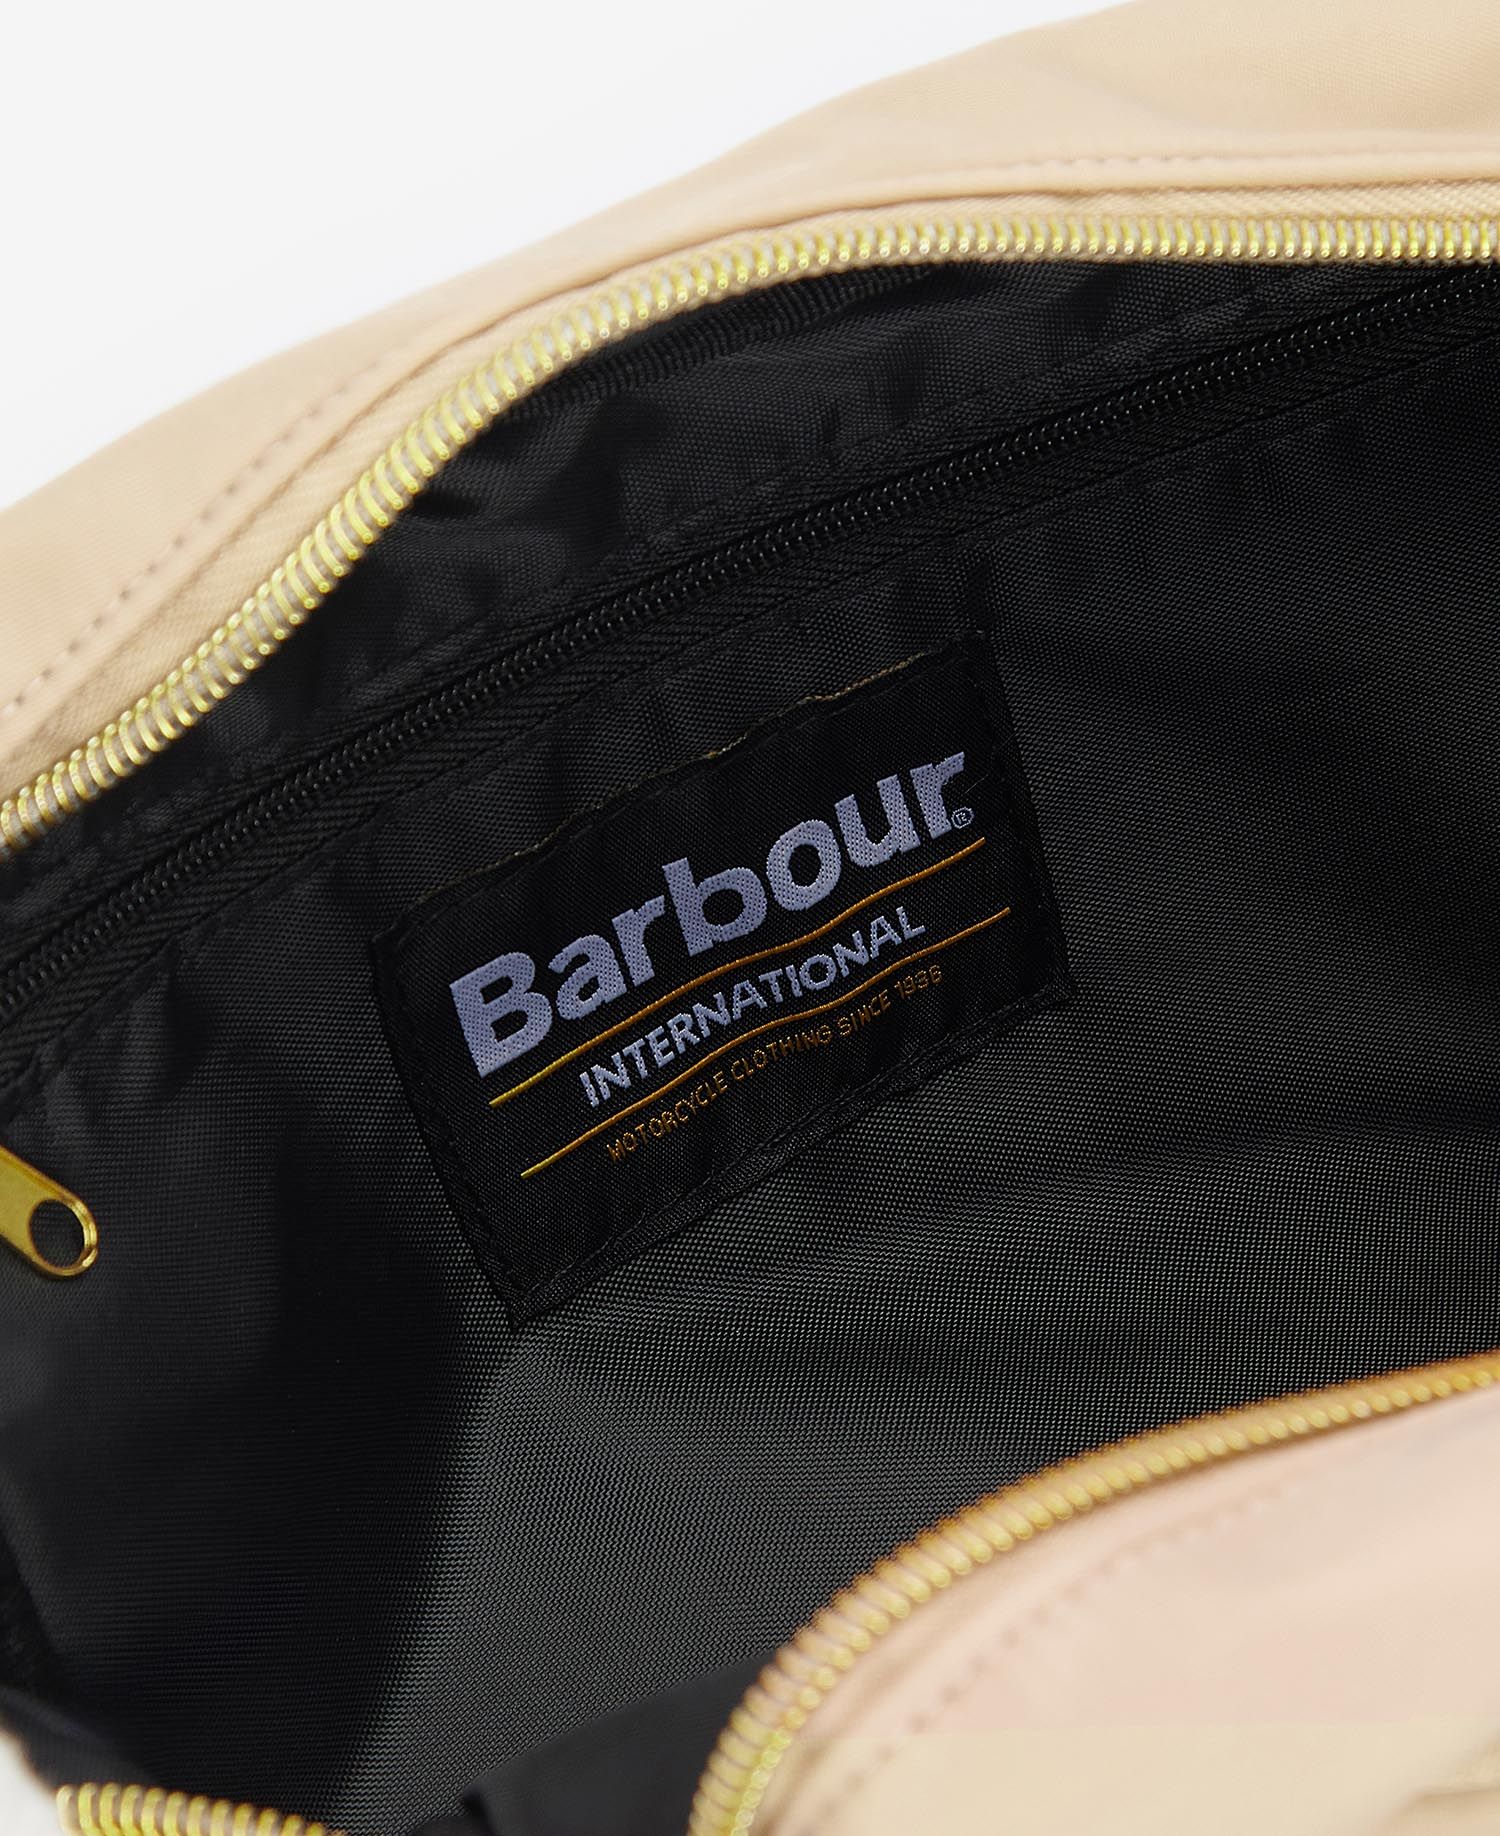 Barbour International Qualify Crossbody Bag